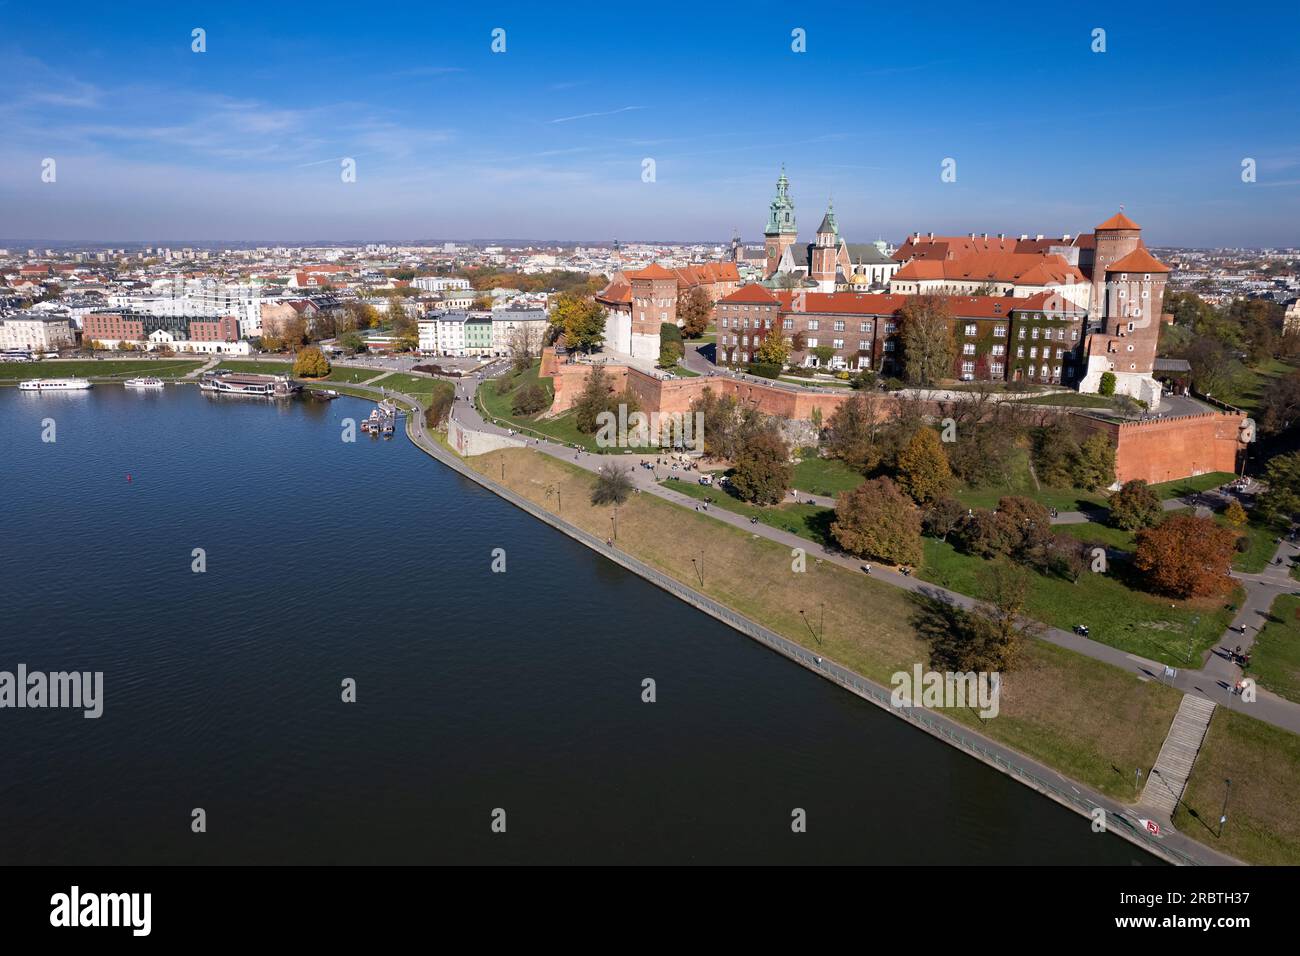 Wawel Castle, Kraków, Poland, Vistula River by drone (aerial view, city panorama) Stock Photo